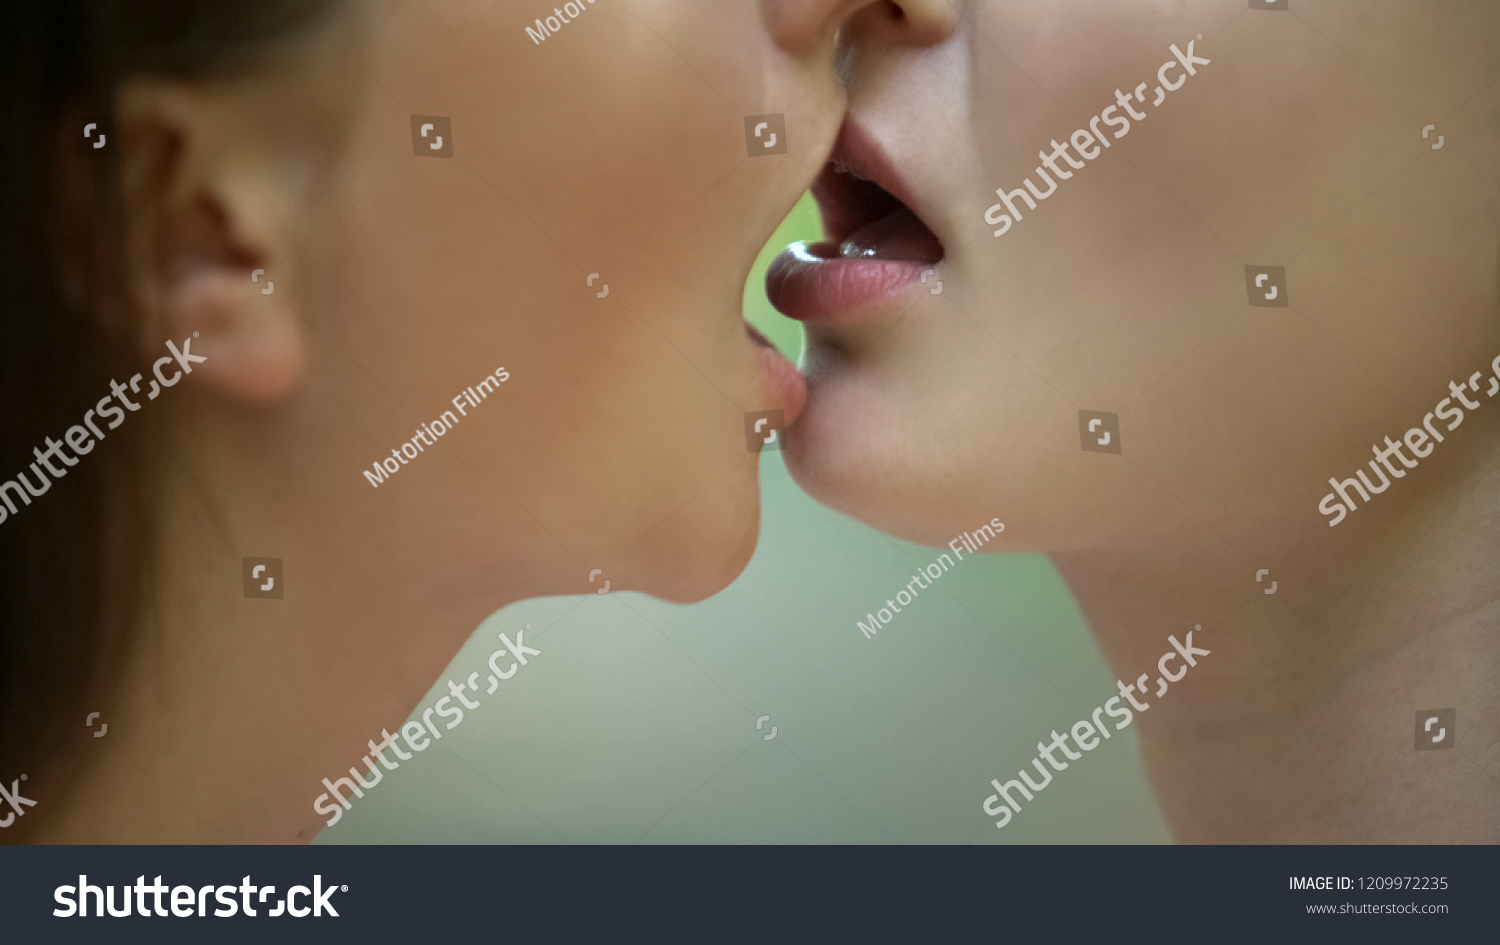 Lesbian Kissing Close Up